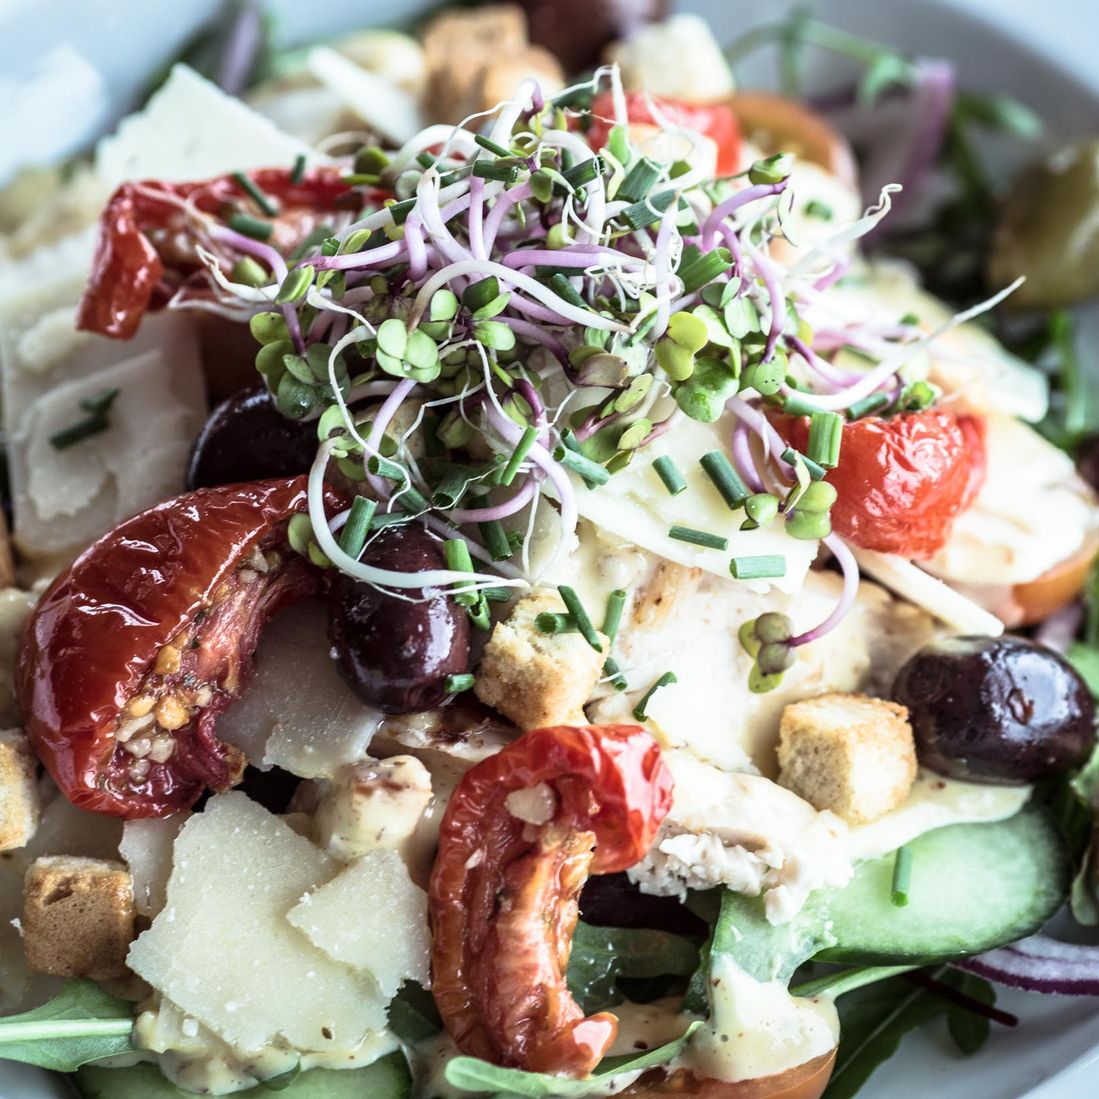 Salat med kvalitetsråvarer anrettet på tallerken i Café Klint i havnen i Gudhjem på Bornholm.